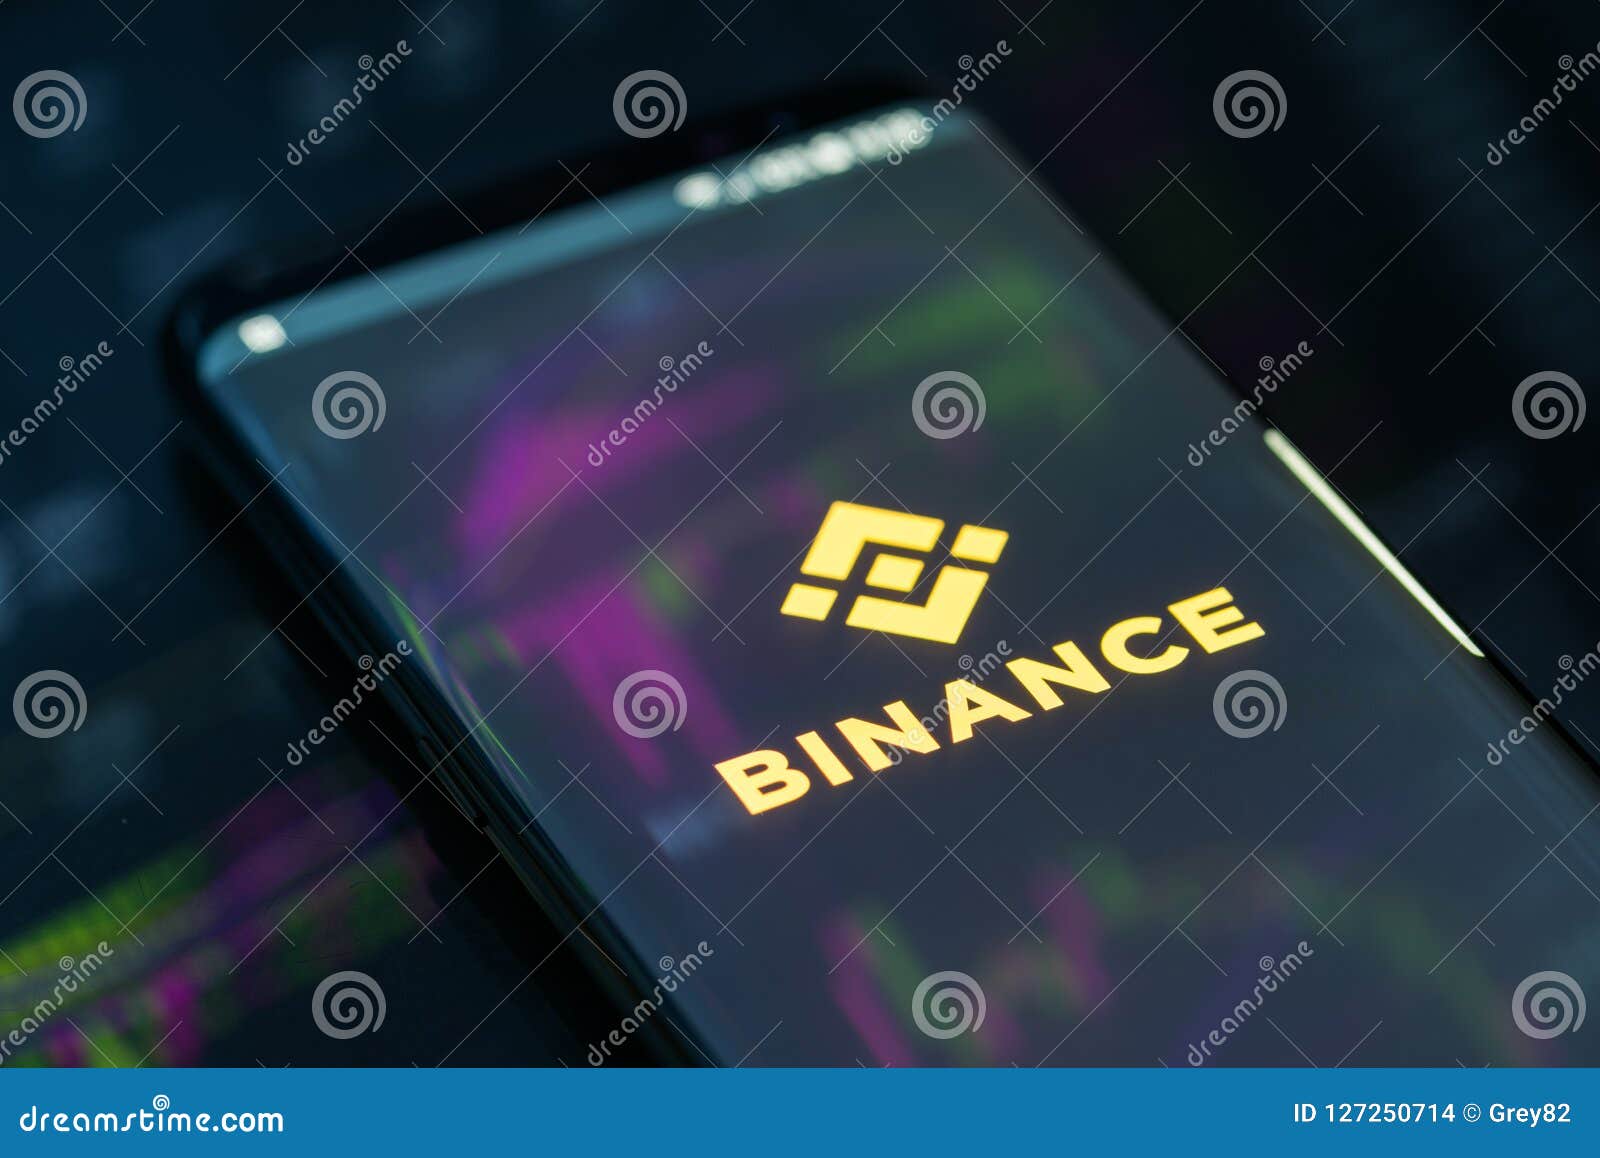 Binance Mobile App On Running On Smartphone Editorial ...